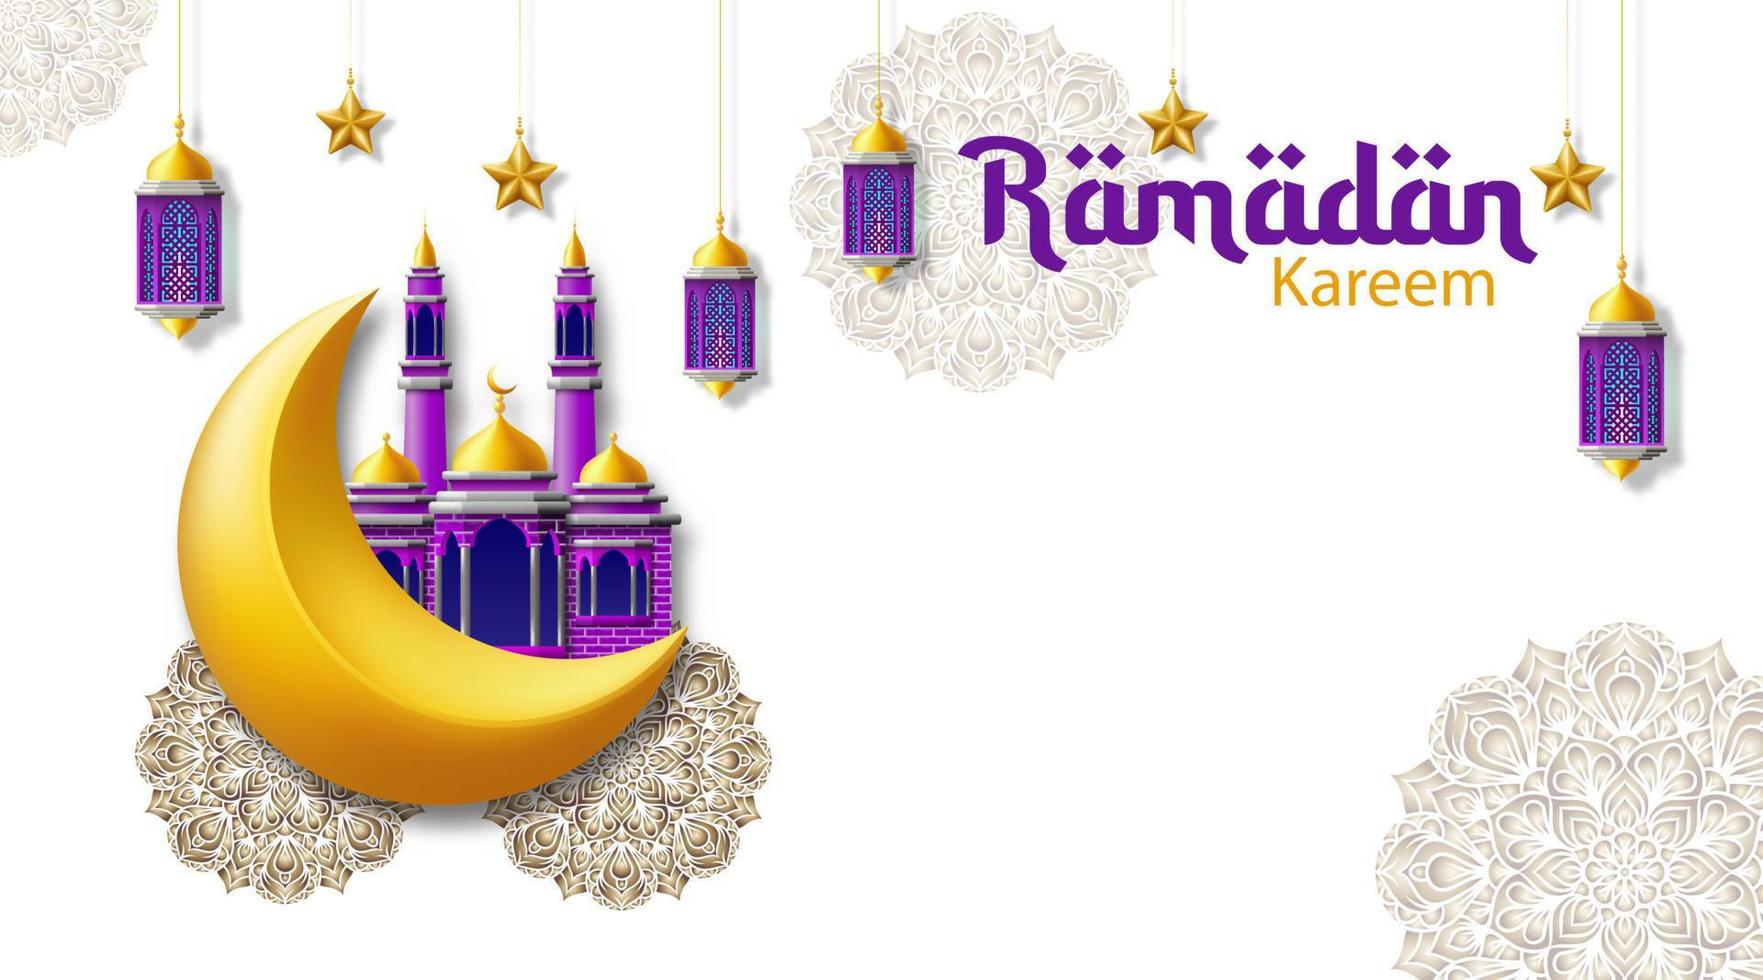 Ramadan kareem. Crescent moon ornament, mosque, lantern and floral mandala isolated on white background. Ramadan Kareem greeting card. Islamic celebration background. vector illustration